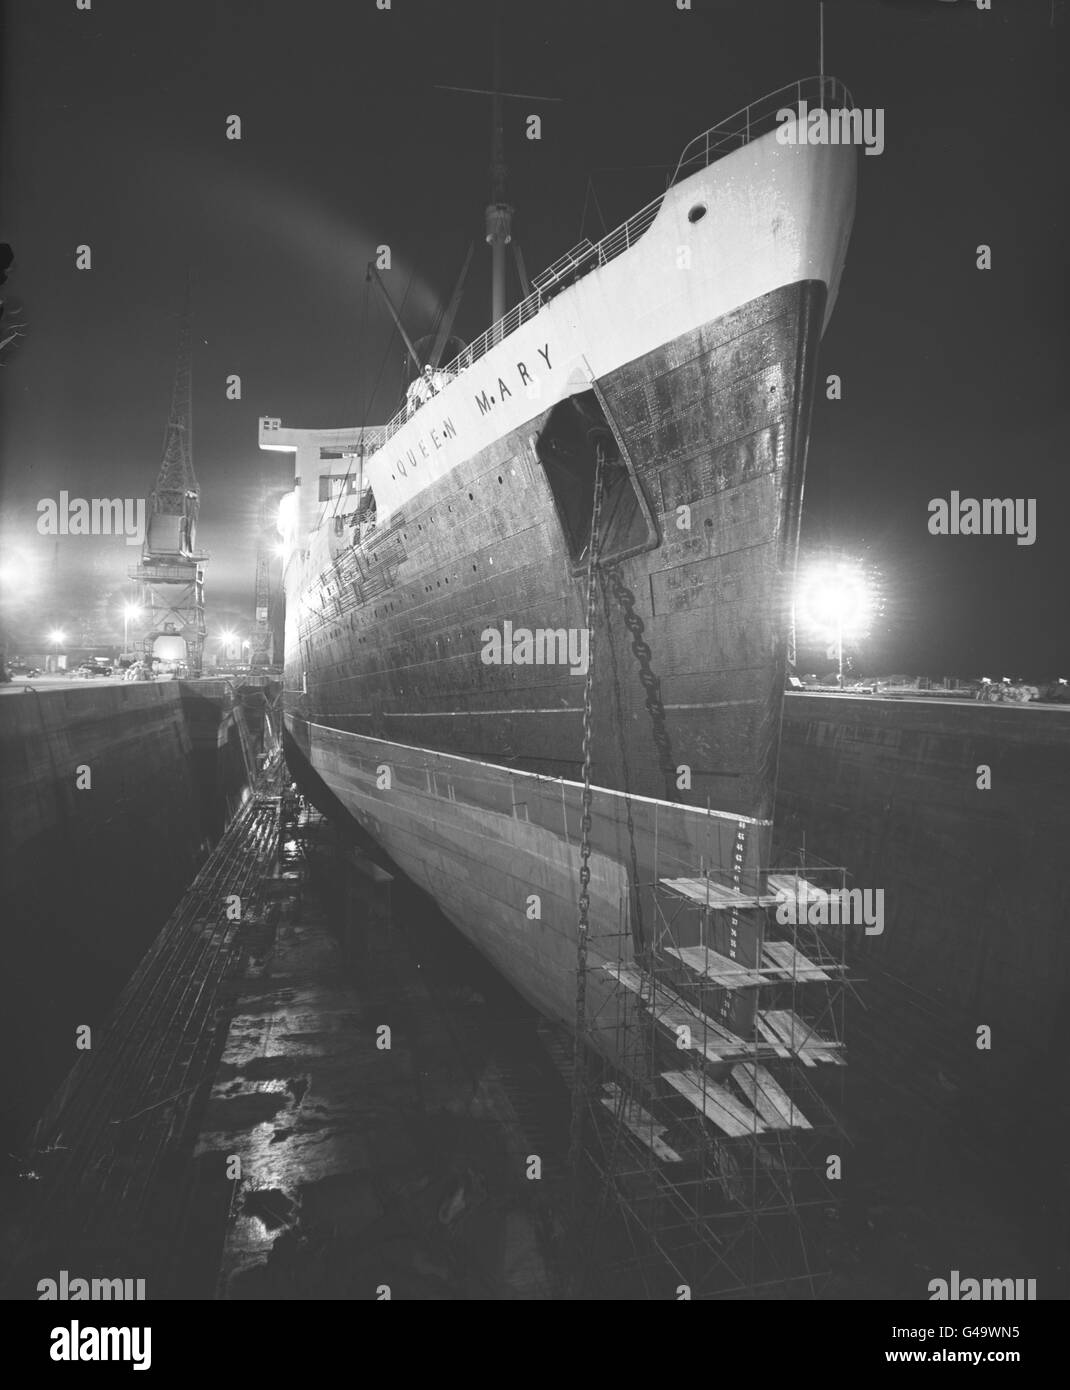 Transport - Wasser - Futter - RMS Queen Mary - King George V Dry Docks, Southampton. Der riesige Liner RMS Queen Mary im Trockendock in Southampton für ihre jährliche Winterüberholung. Stockfoto